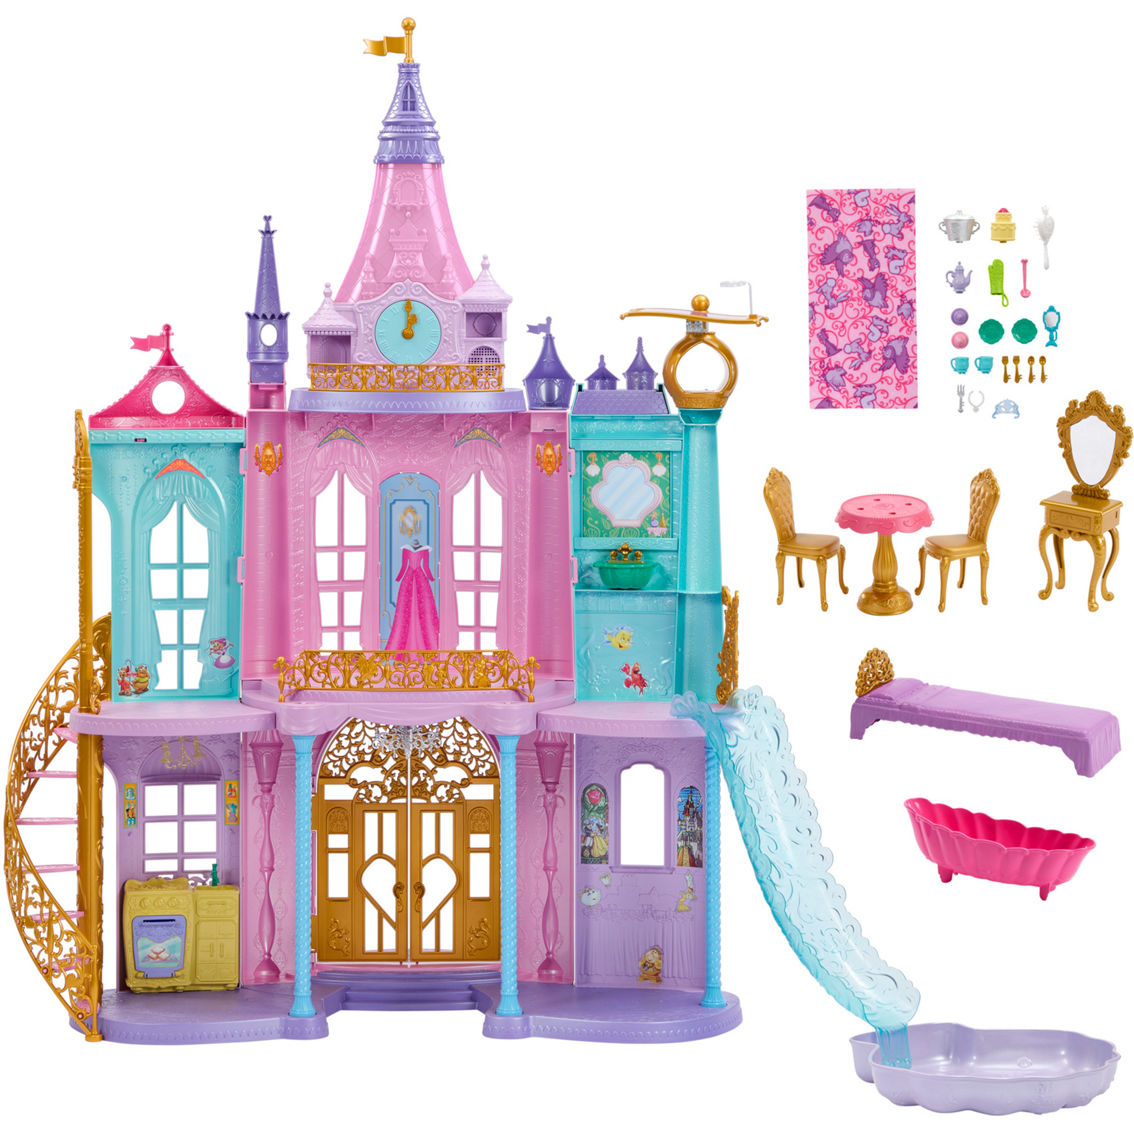 Disney Princess Royal Adventures Castle Dollhouse - Image 2 of 8